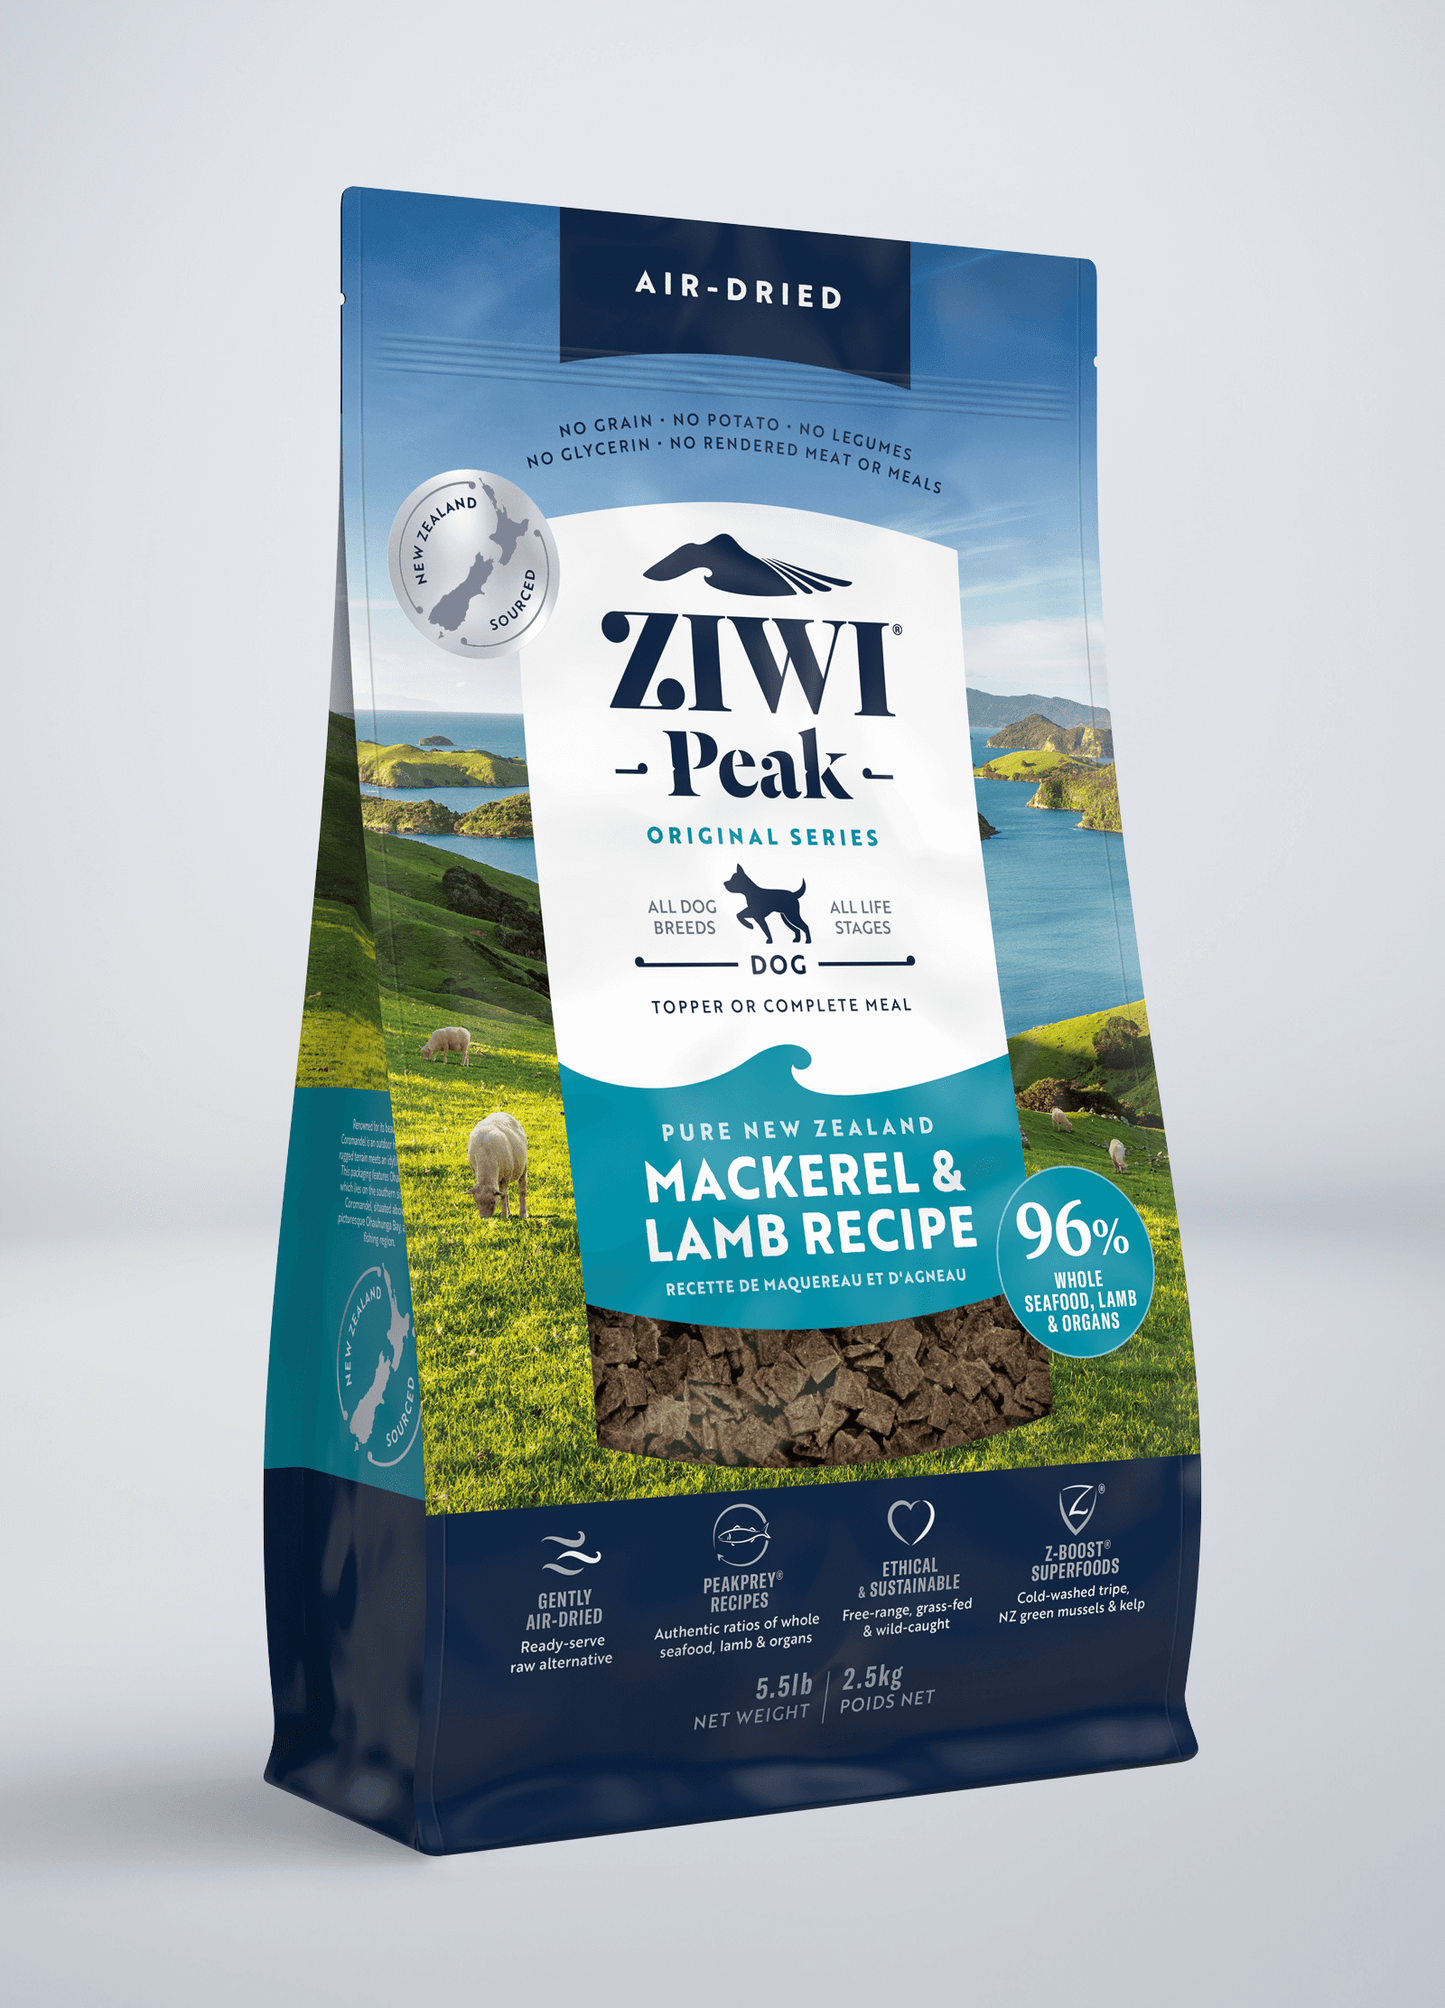 Original Air-dried Mackerel & Lamb Recipe for dogs